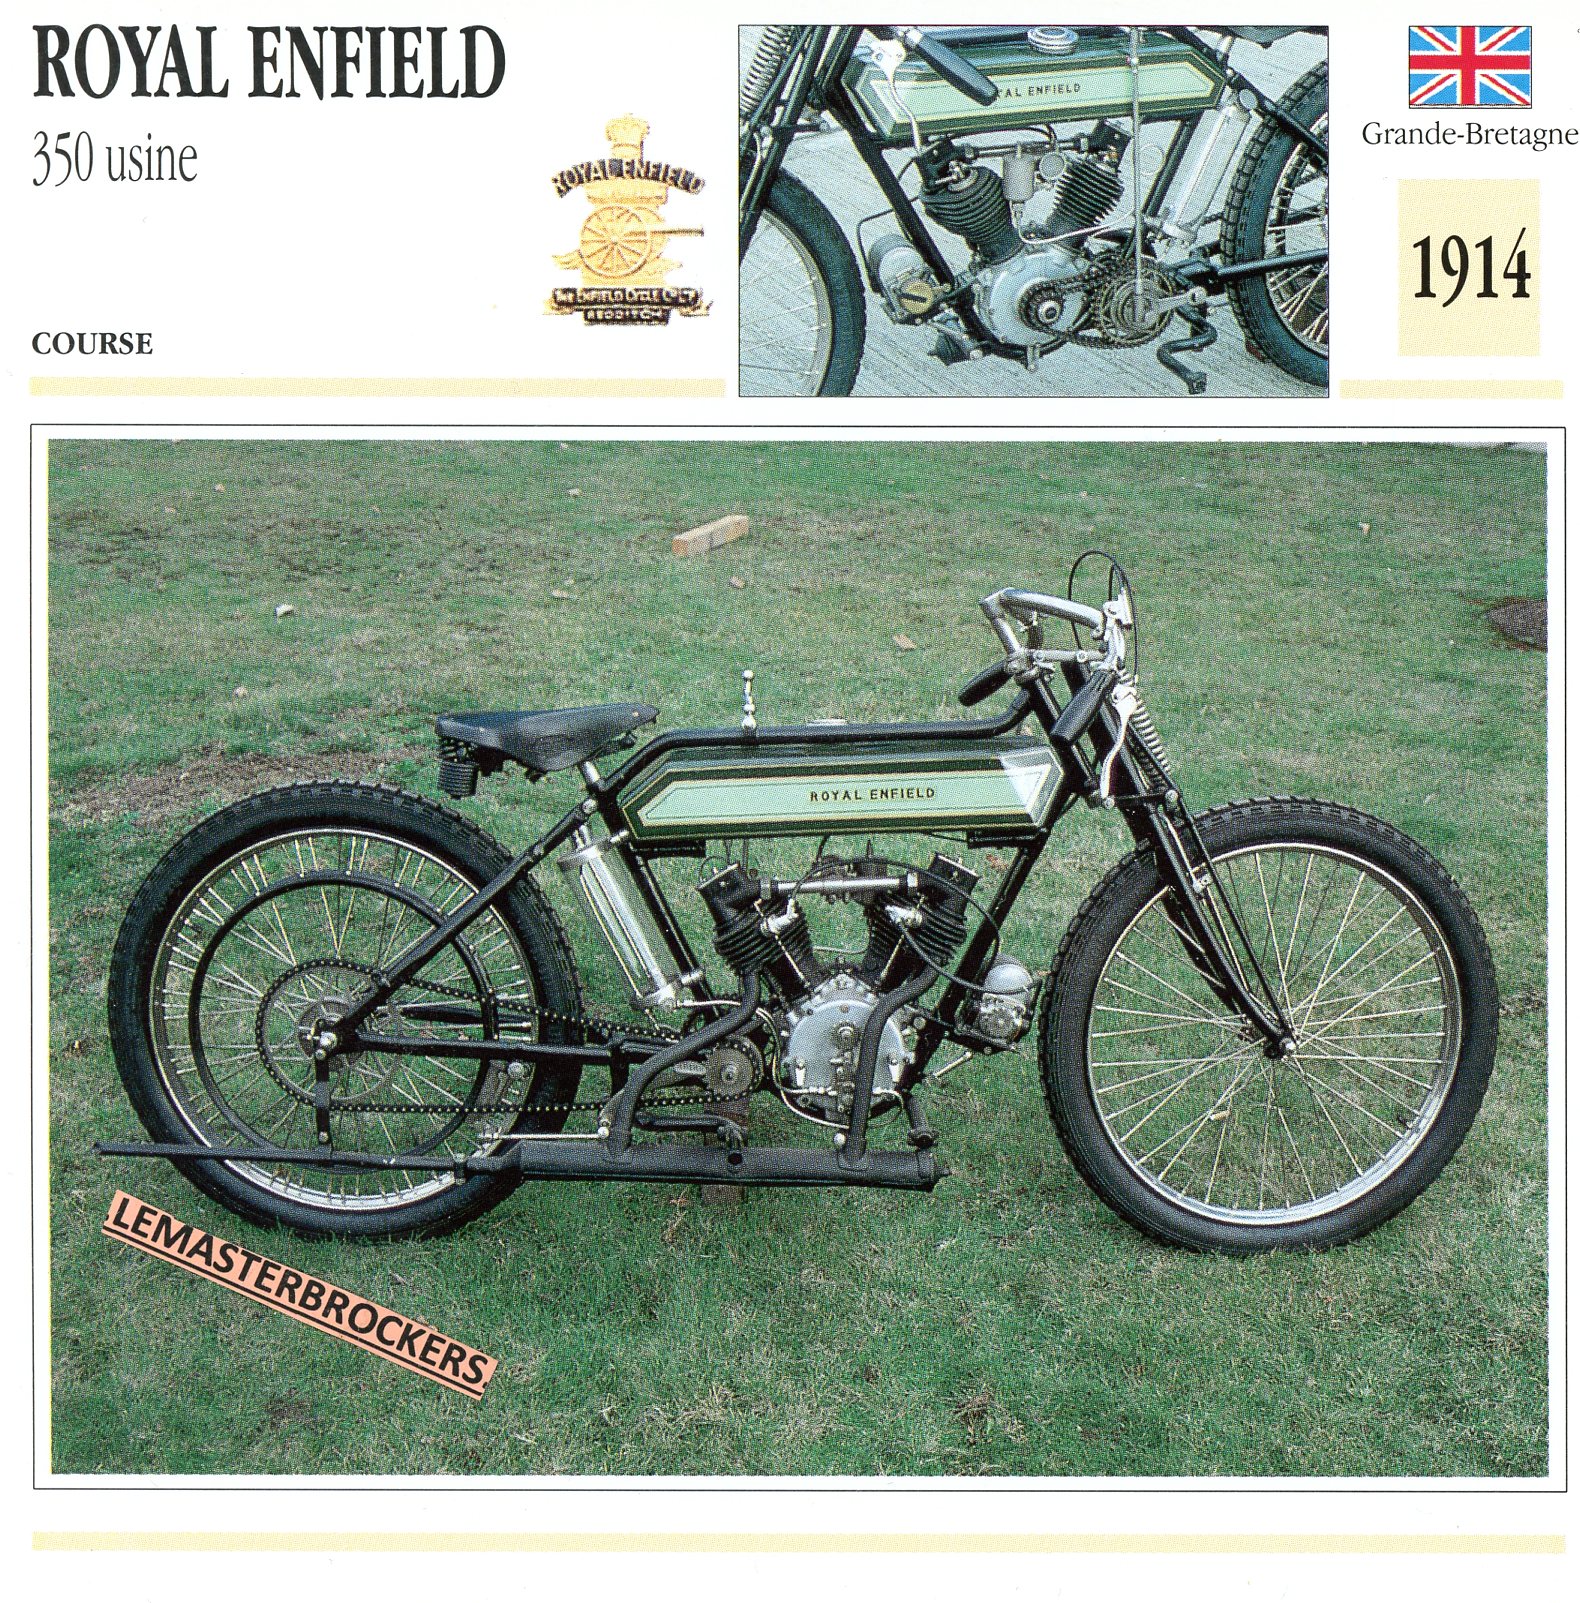 ROYAL ENFIELD 350 USINE 1914 - FICHE MOTO